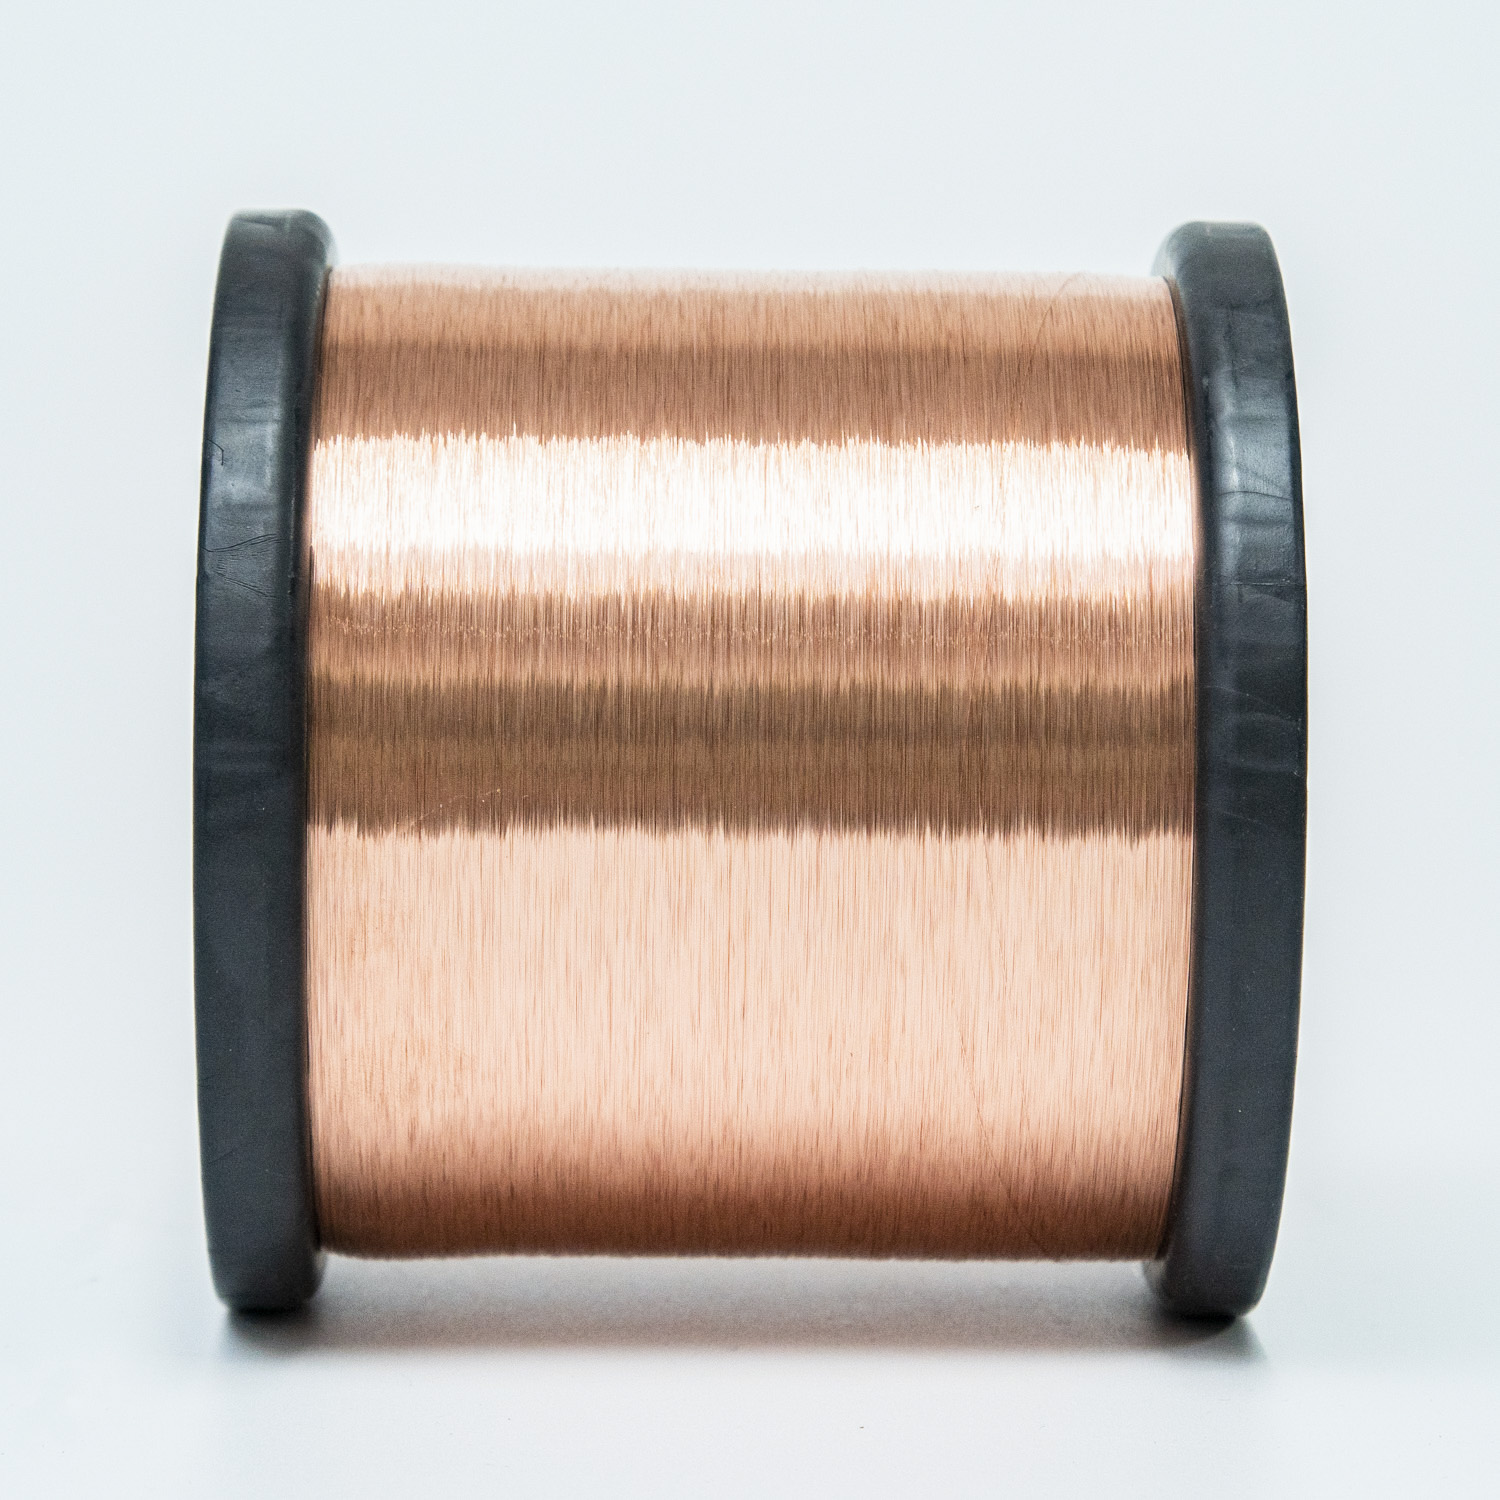 0.16mm annealed bare copper wire